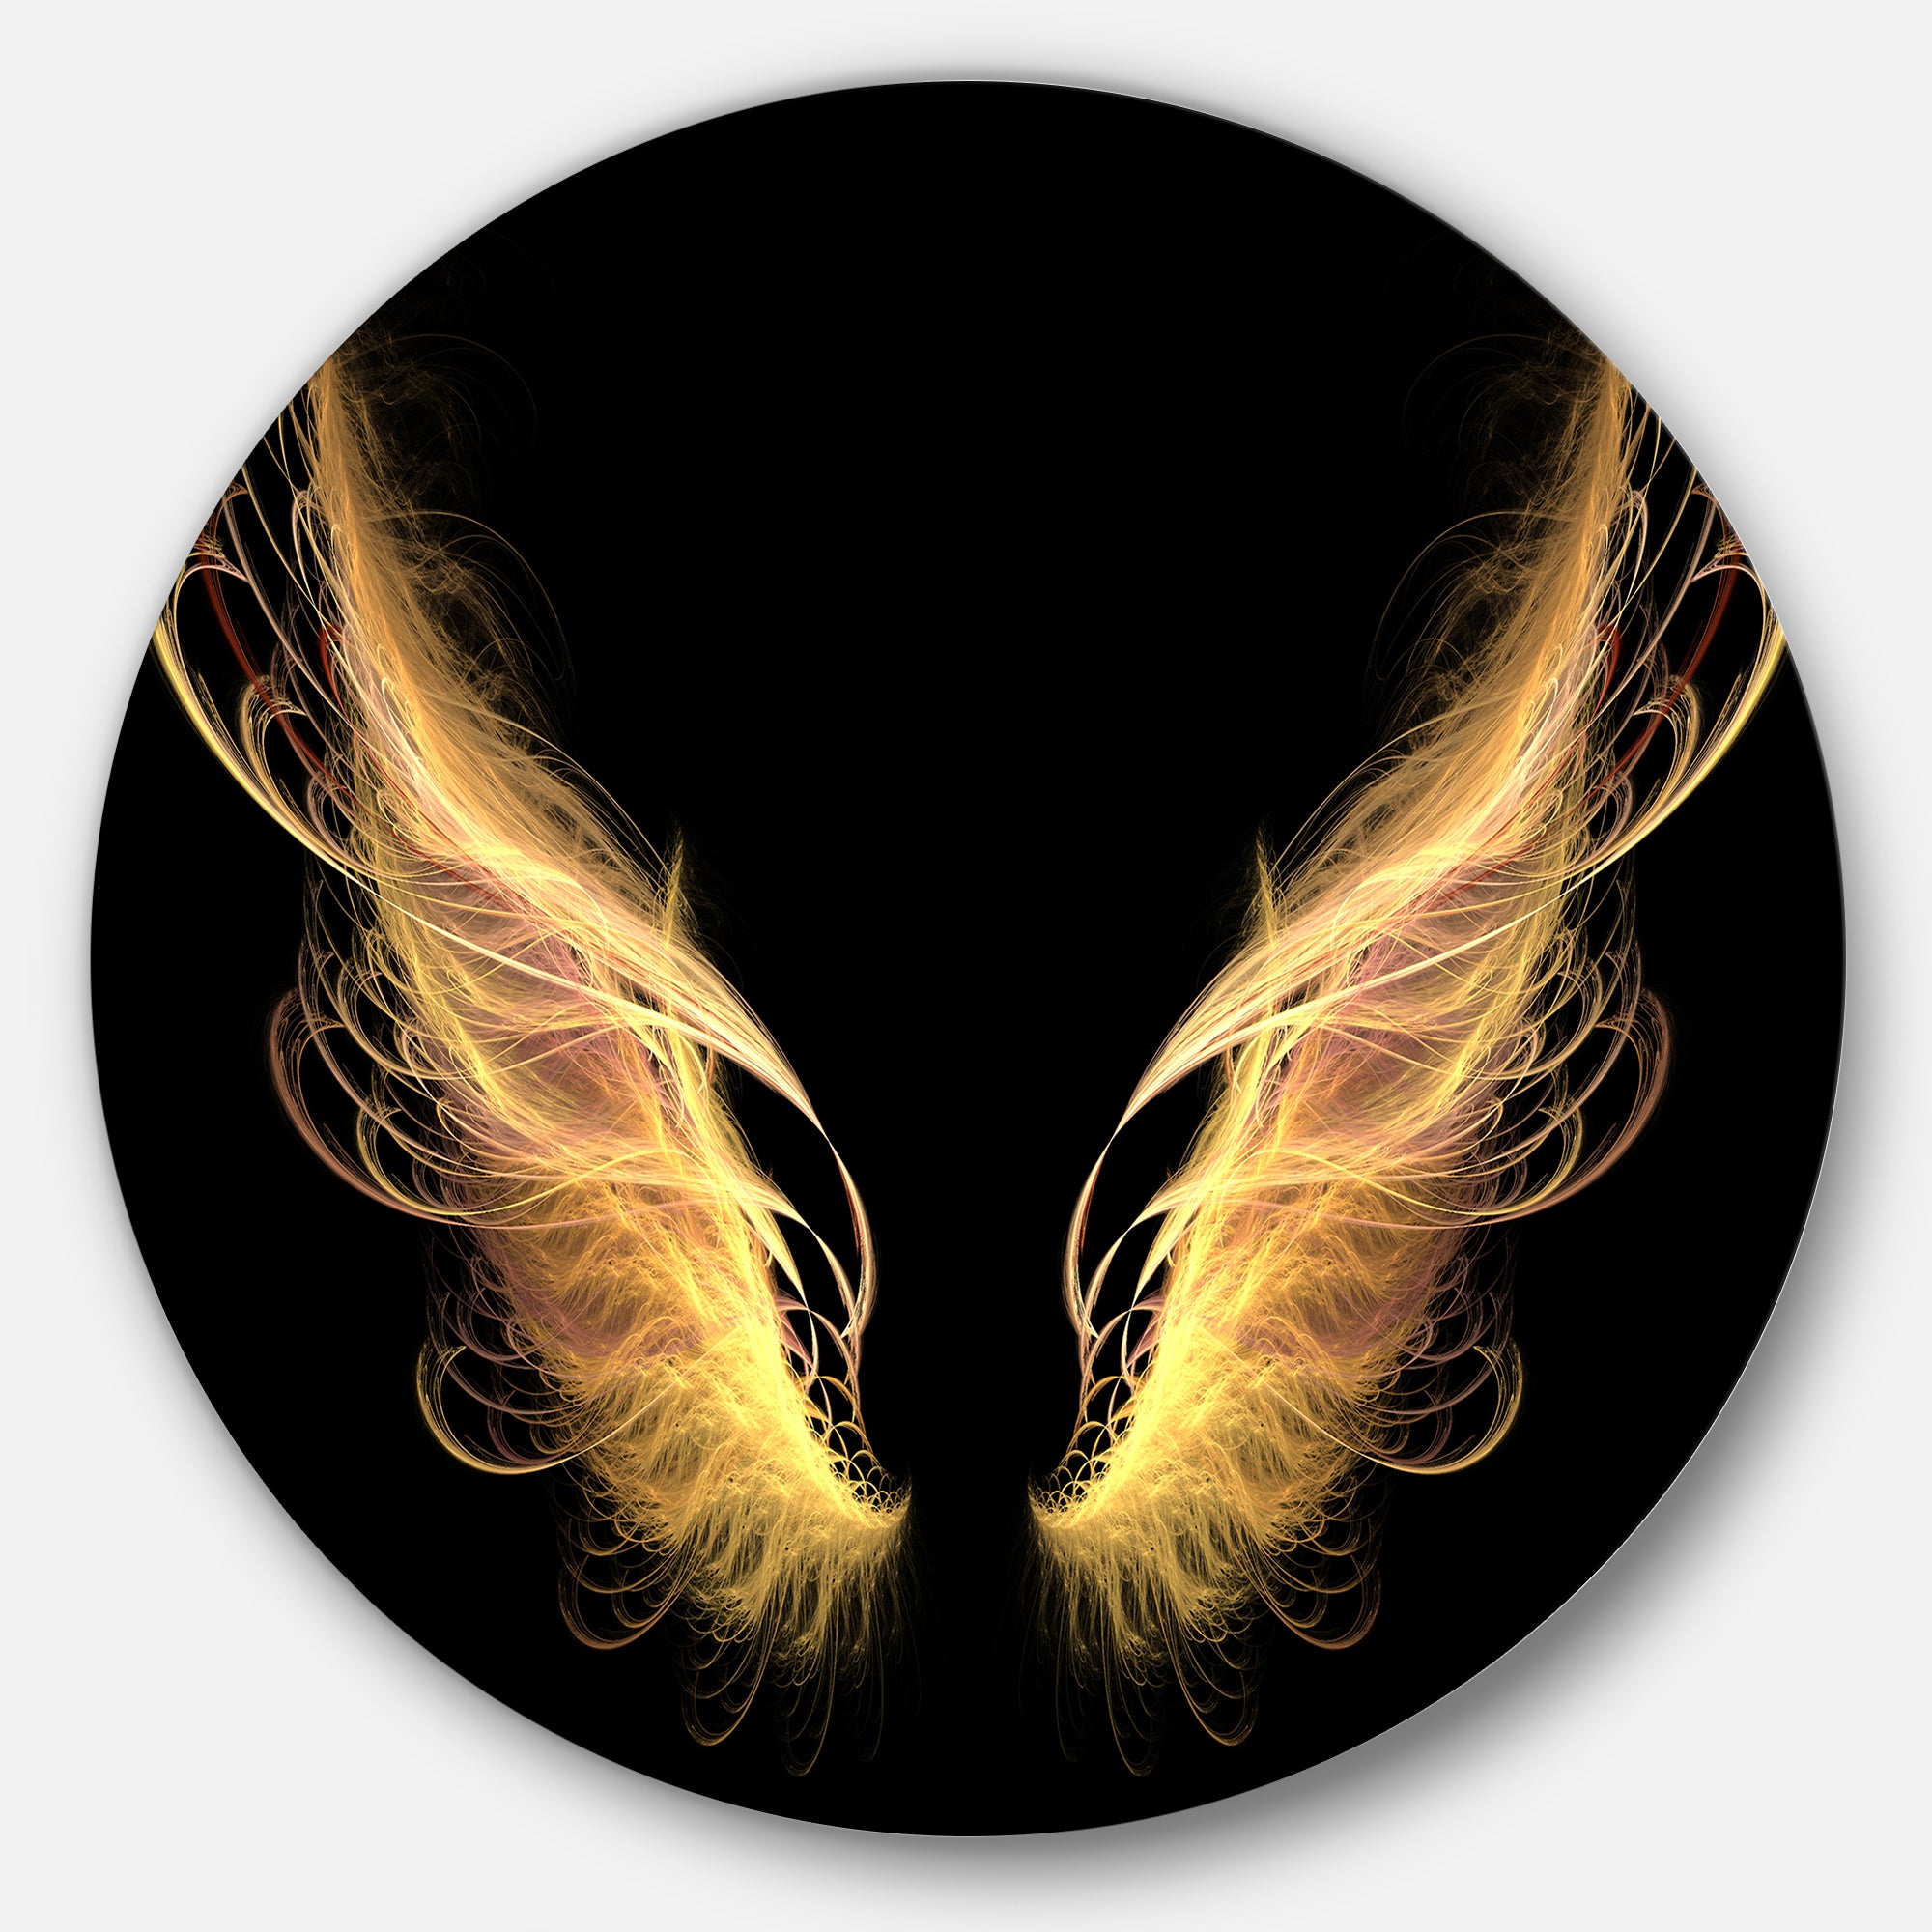 Golden Angel Wings on Black' Disc Oversized Abstract Metal Art